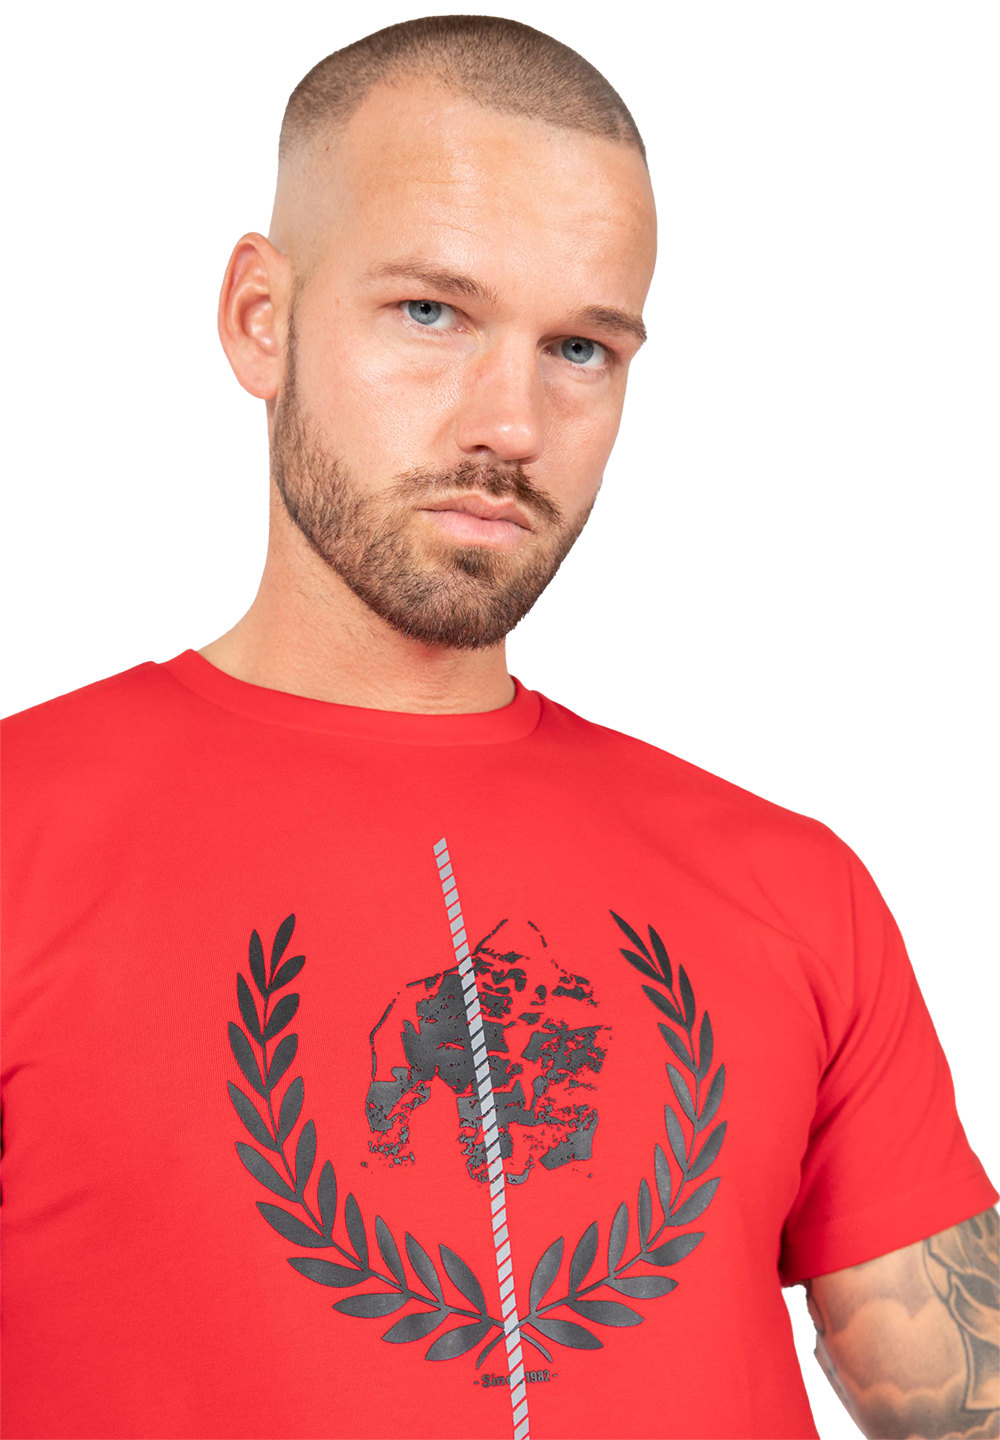 Футболка Rock Hill T-shirt – Red от Gorilla Wear